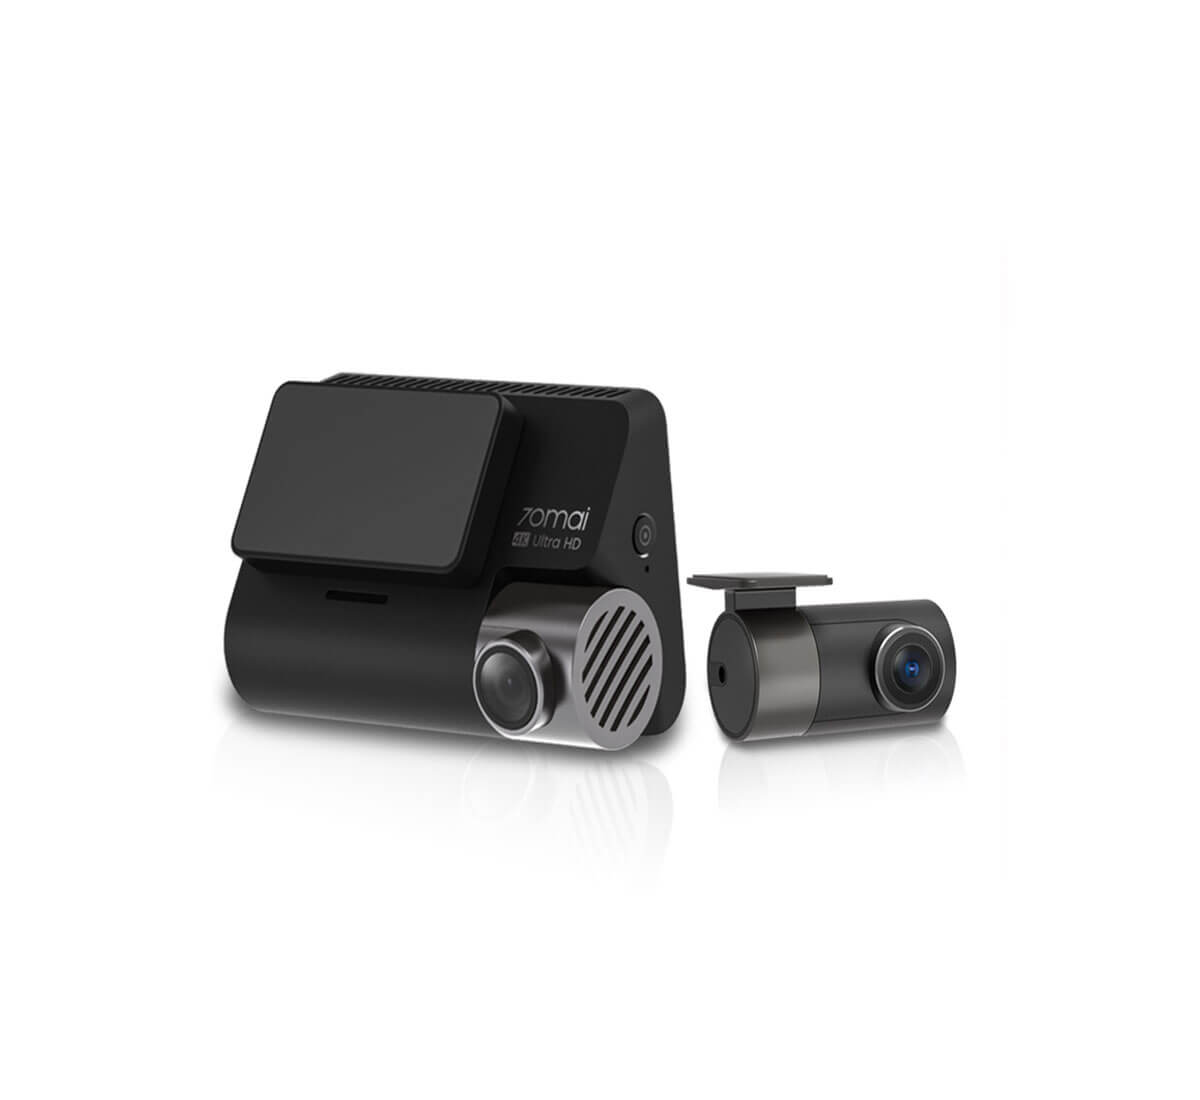 دوربین خودرو هوشمند شیائومی ۷۰mai Dash Cam 4K A800s-1 (به همراه دوربین عقب)